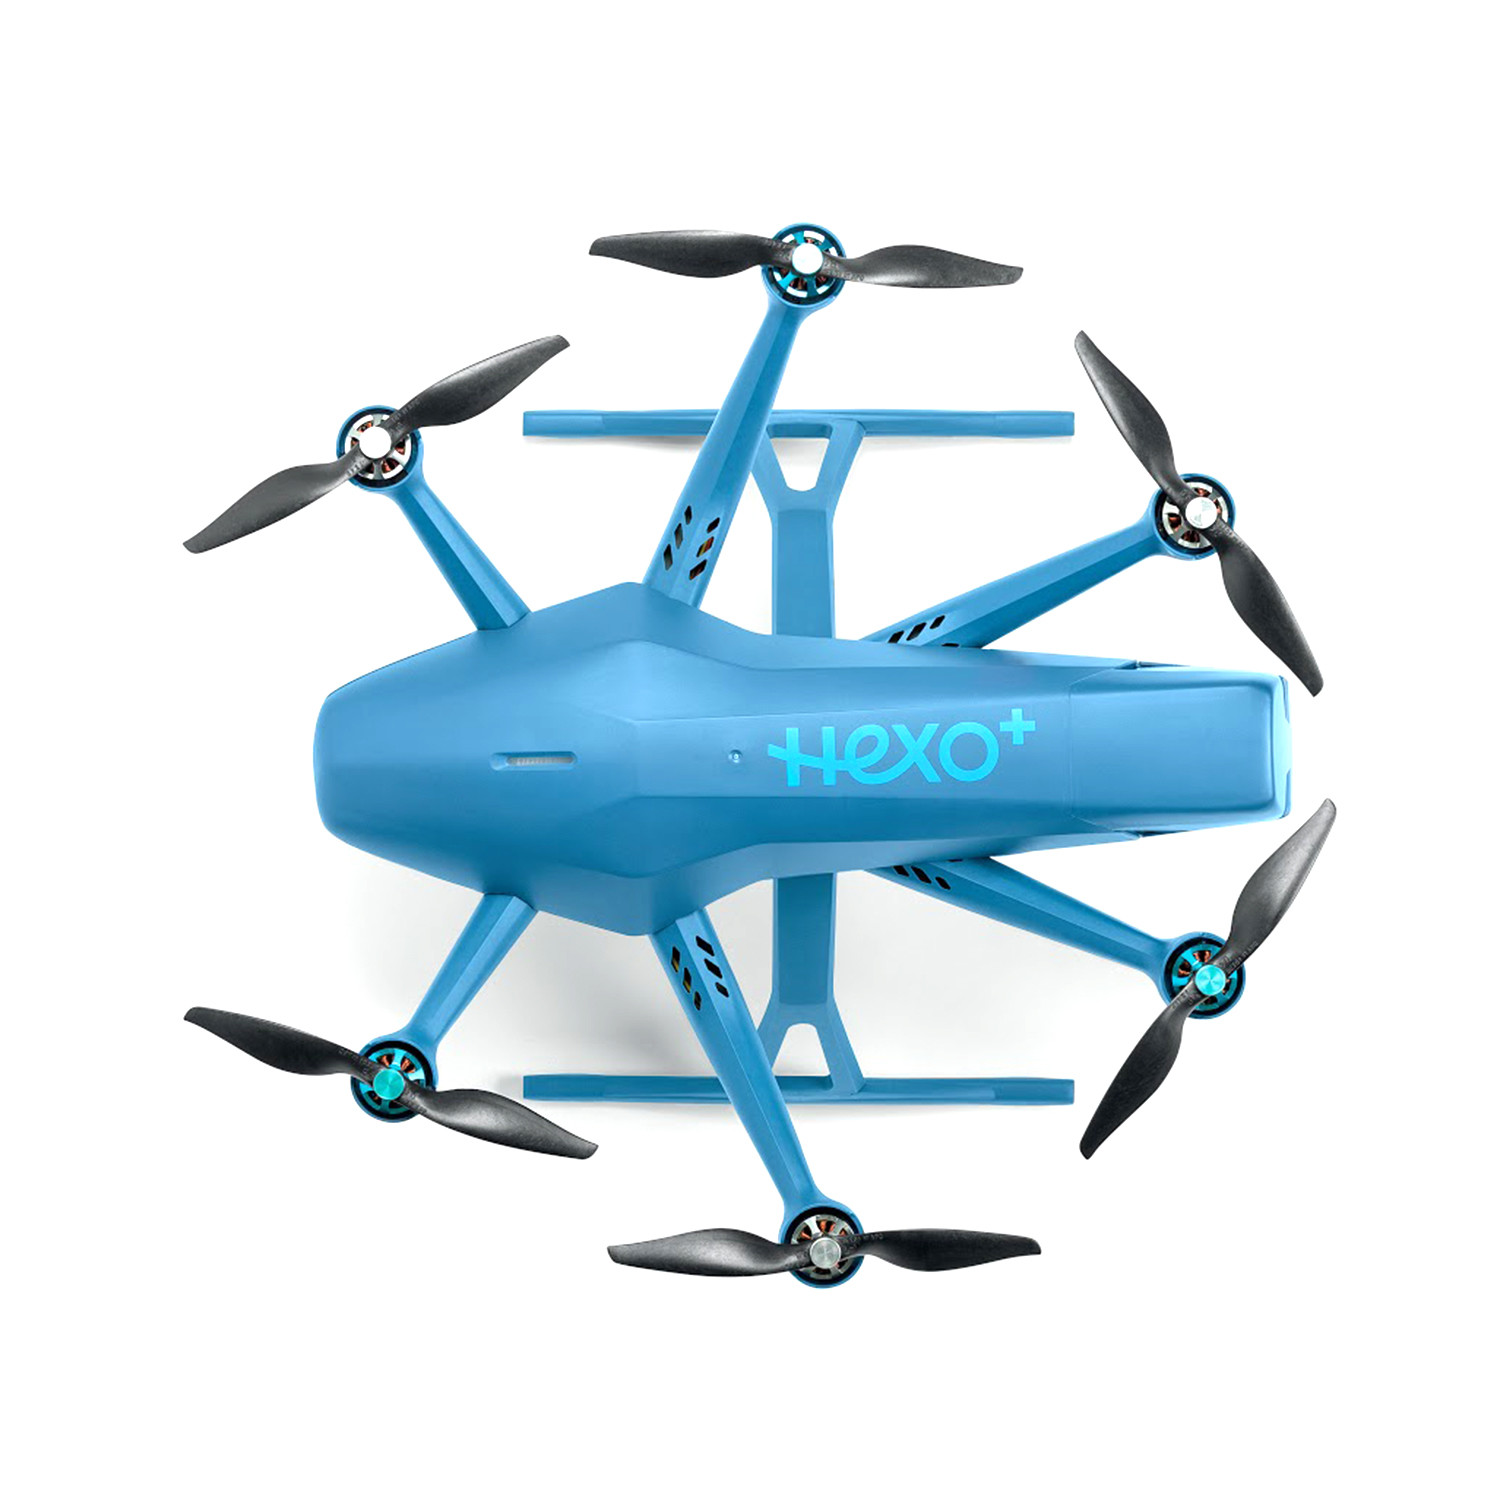 Hexo+ Drone Hexo Plus - Touch Modern